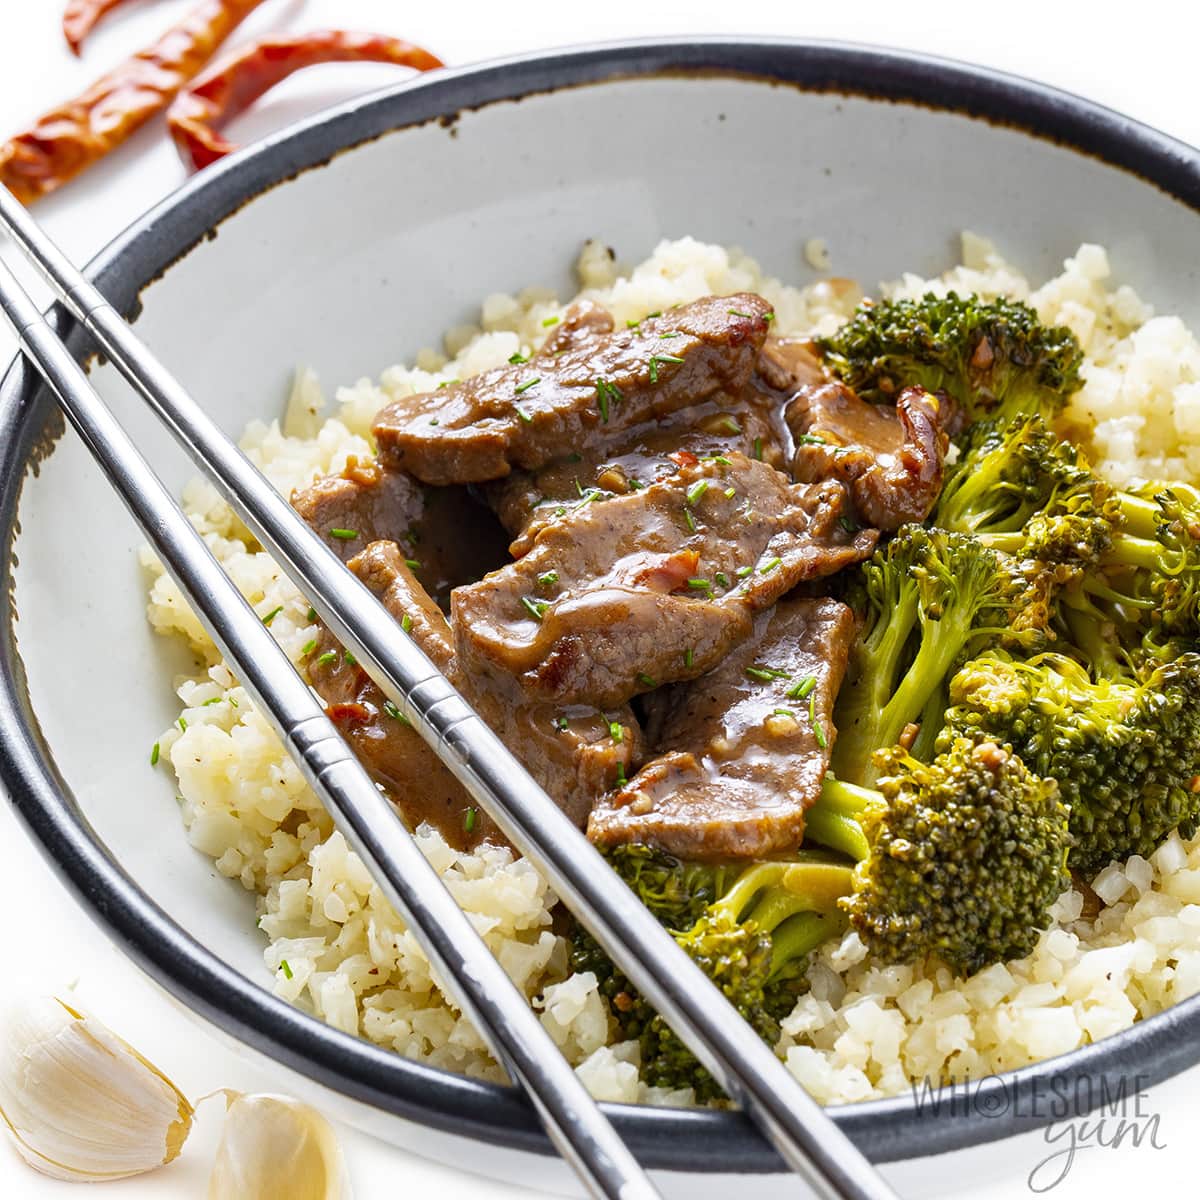 Hunan beef in a bowl with broccoli, cauliflower rice, and chopsticks.